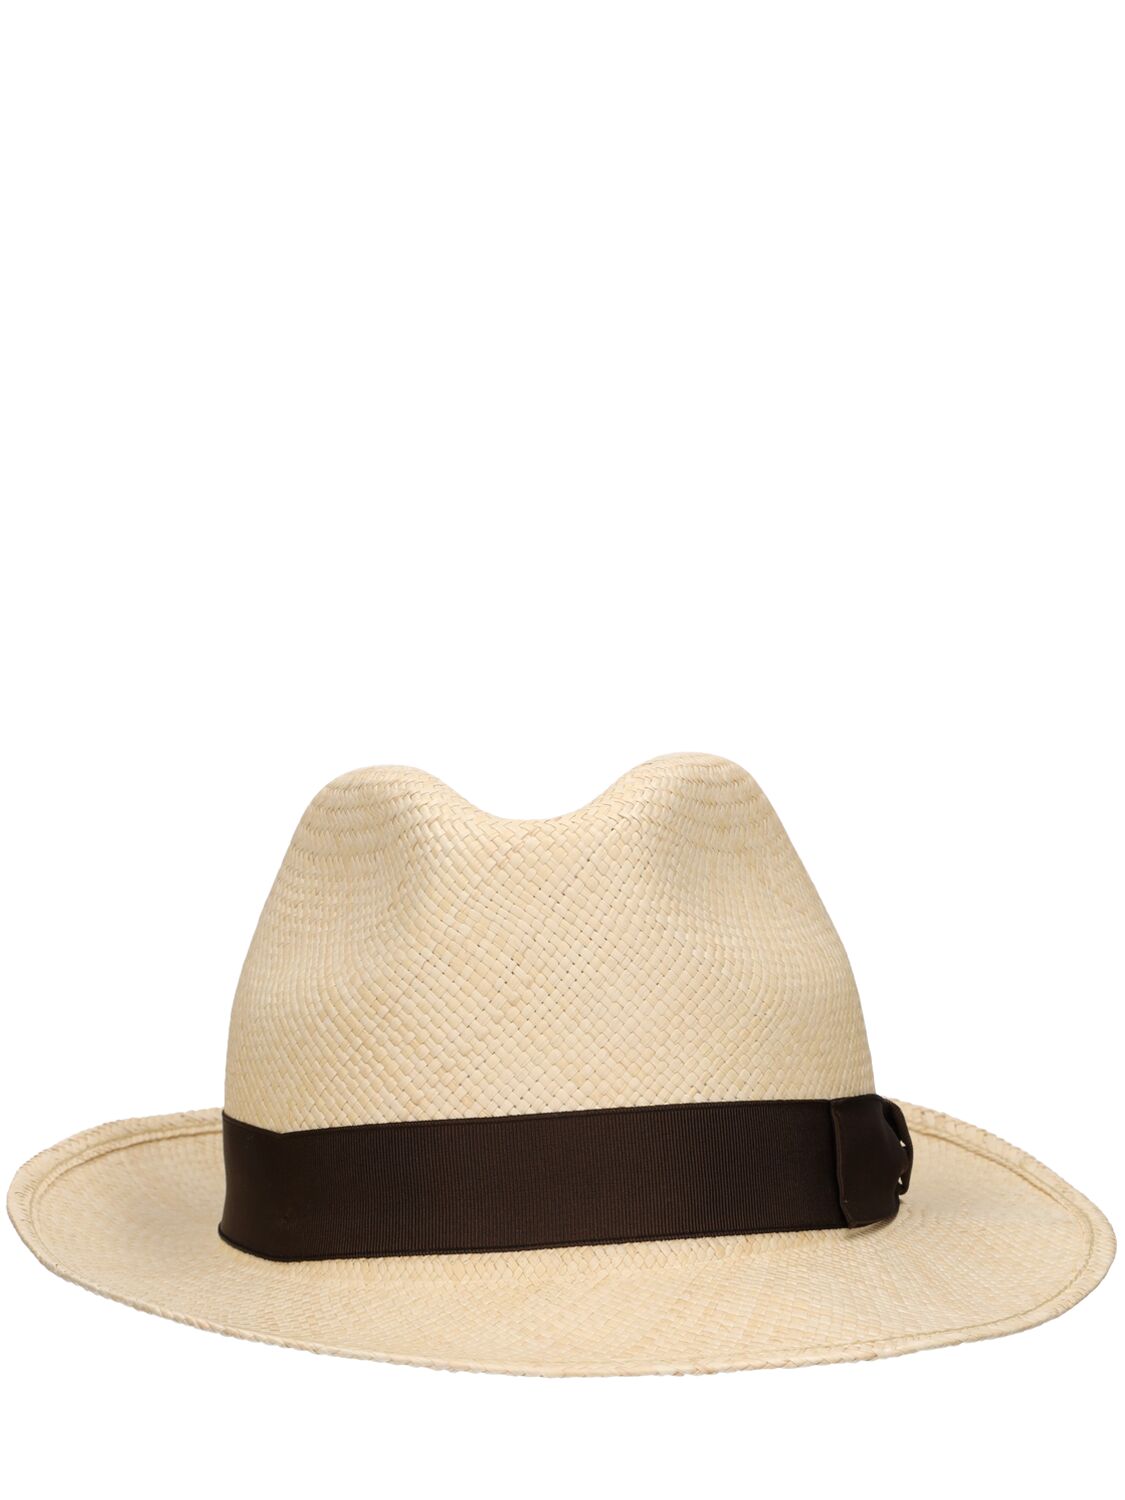 Borsalino Federico 6cm Brim Straw Panama Hat In Natural,khaki